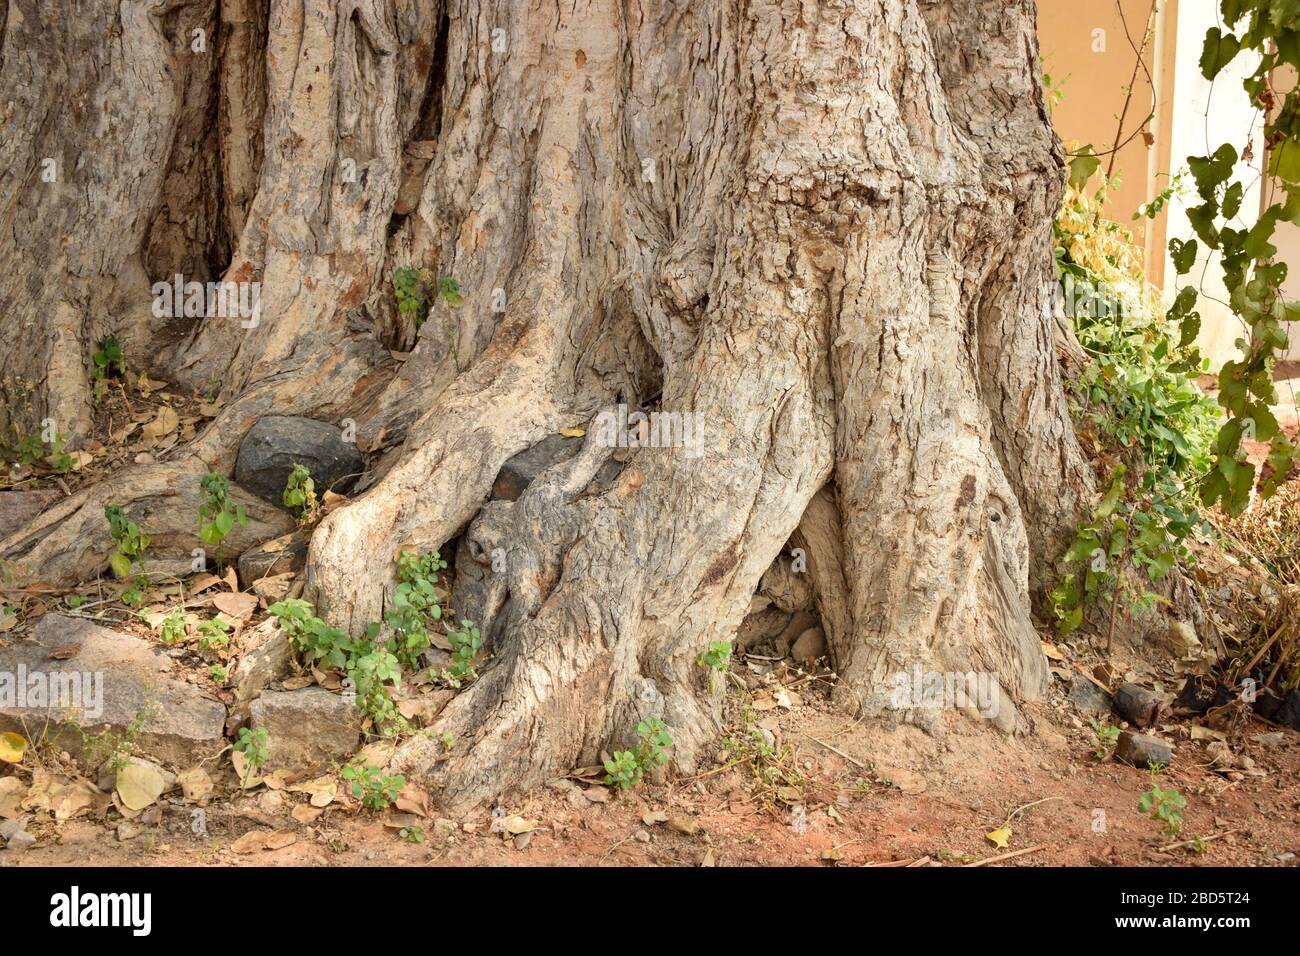 Radici naturali di albero di Banyan grandi in giungla/foresta immagine di fotografia d'archivio Foto Stock